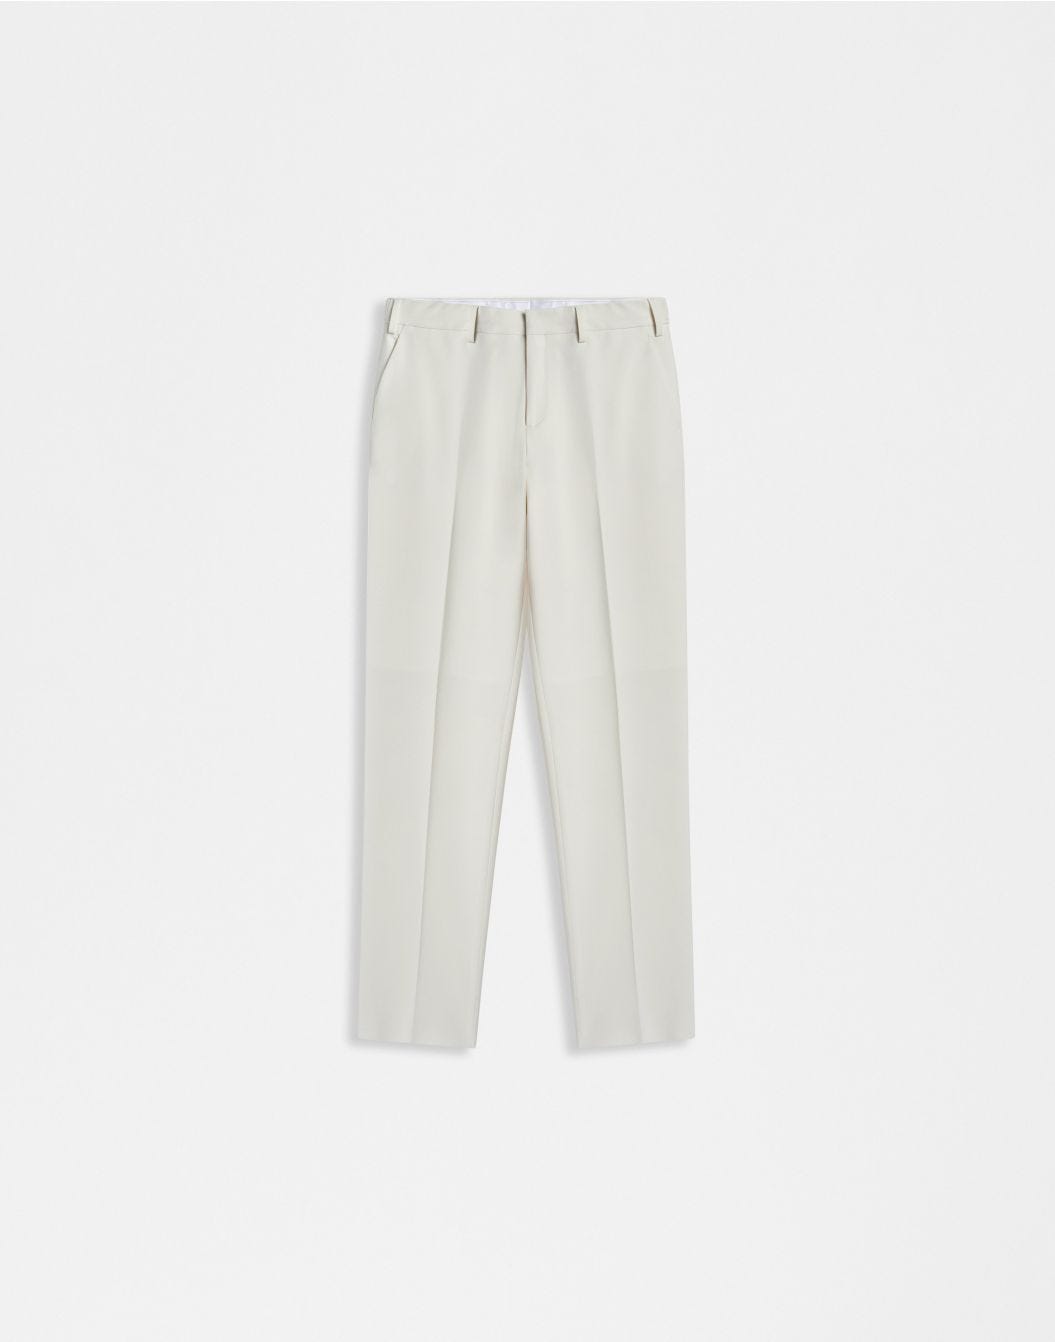 Cream pleatless trousers